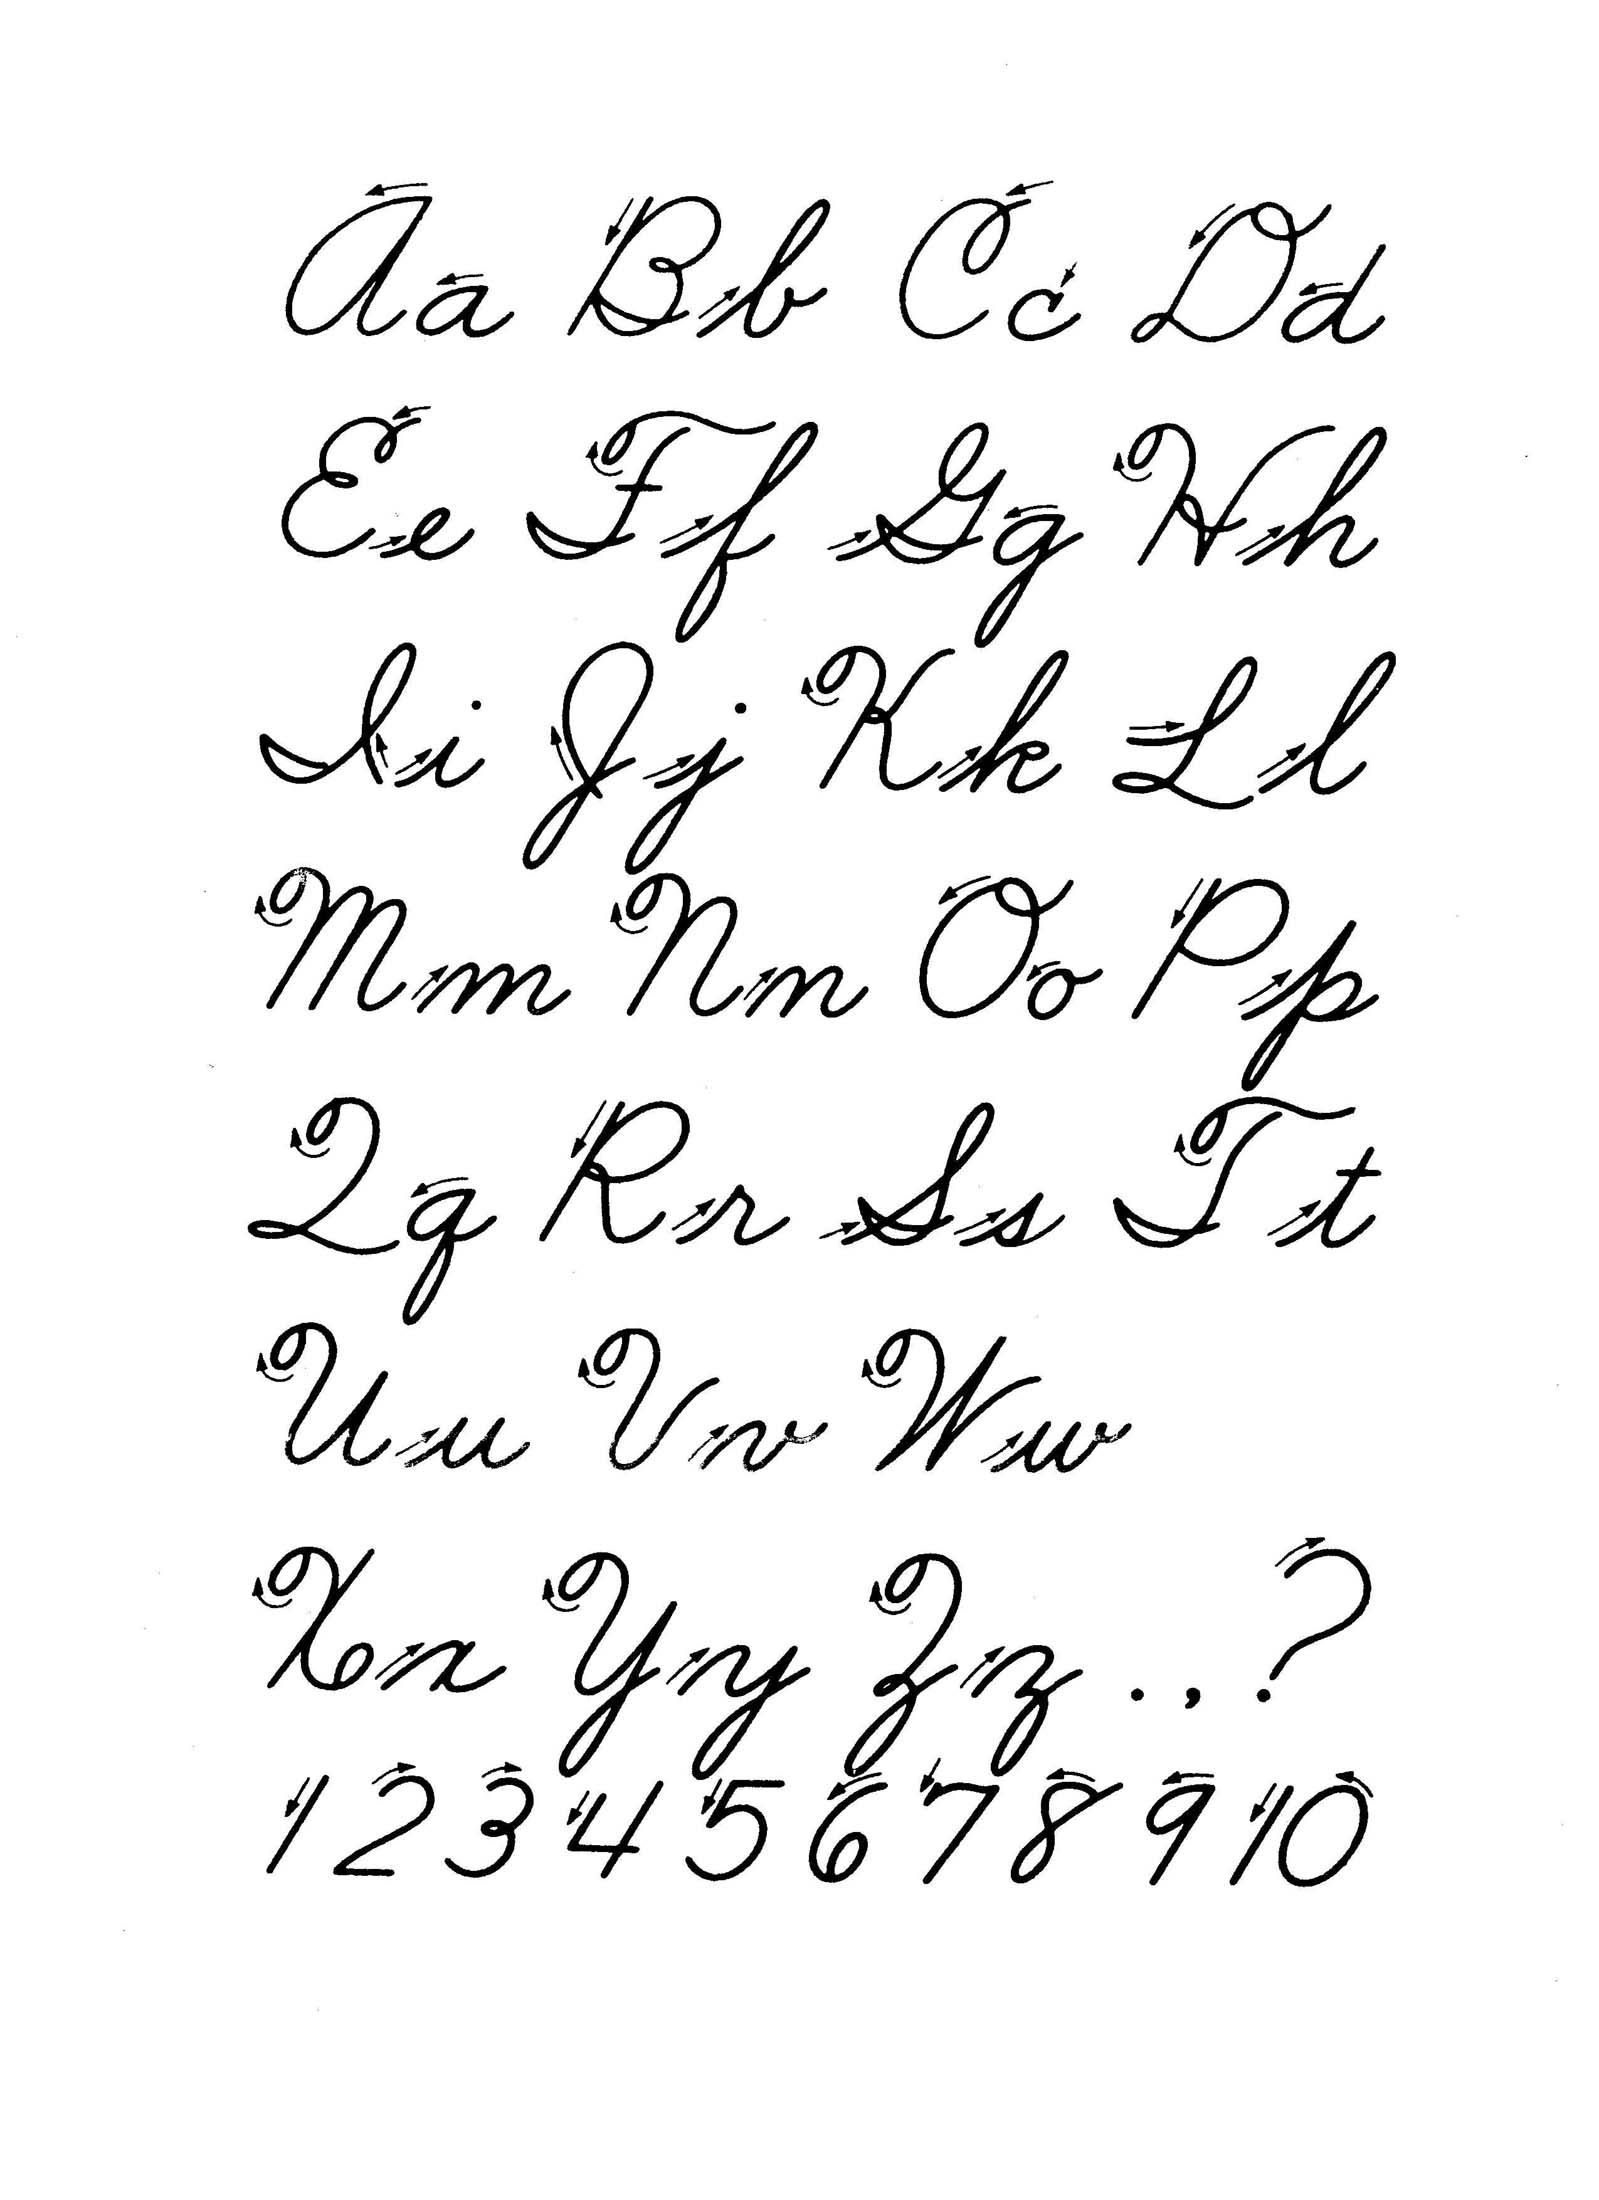 alphabet-printable-cursive-writing-practice-sheets